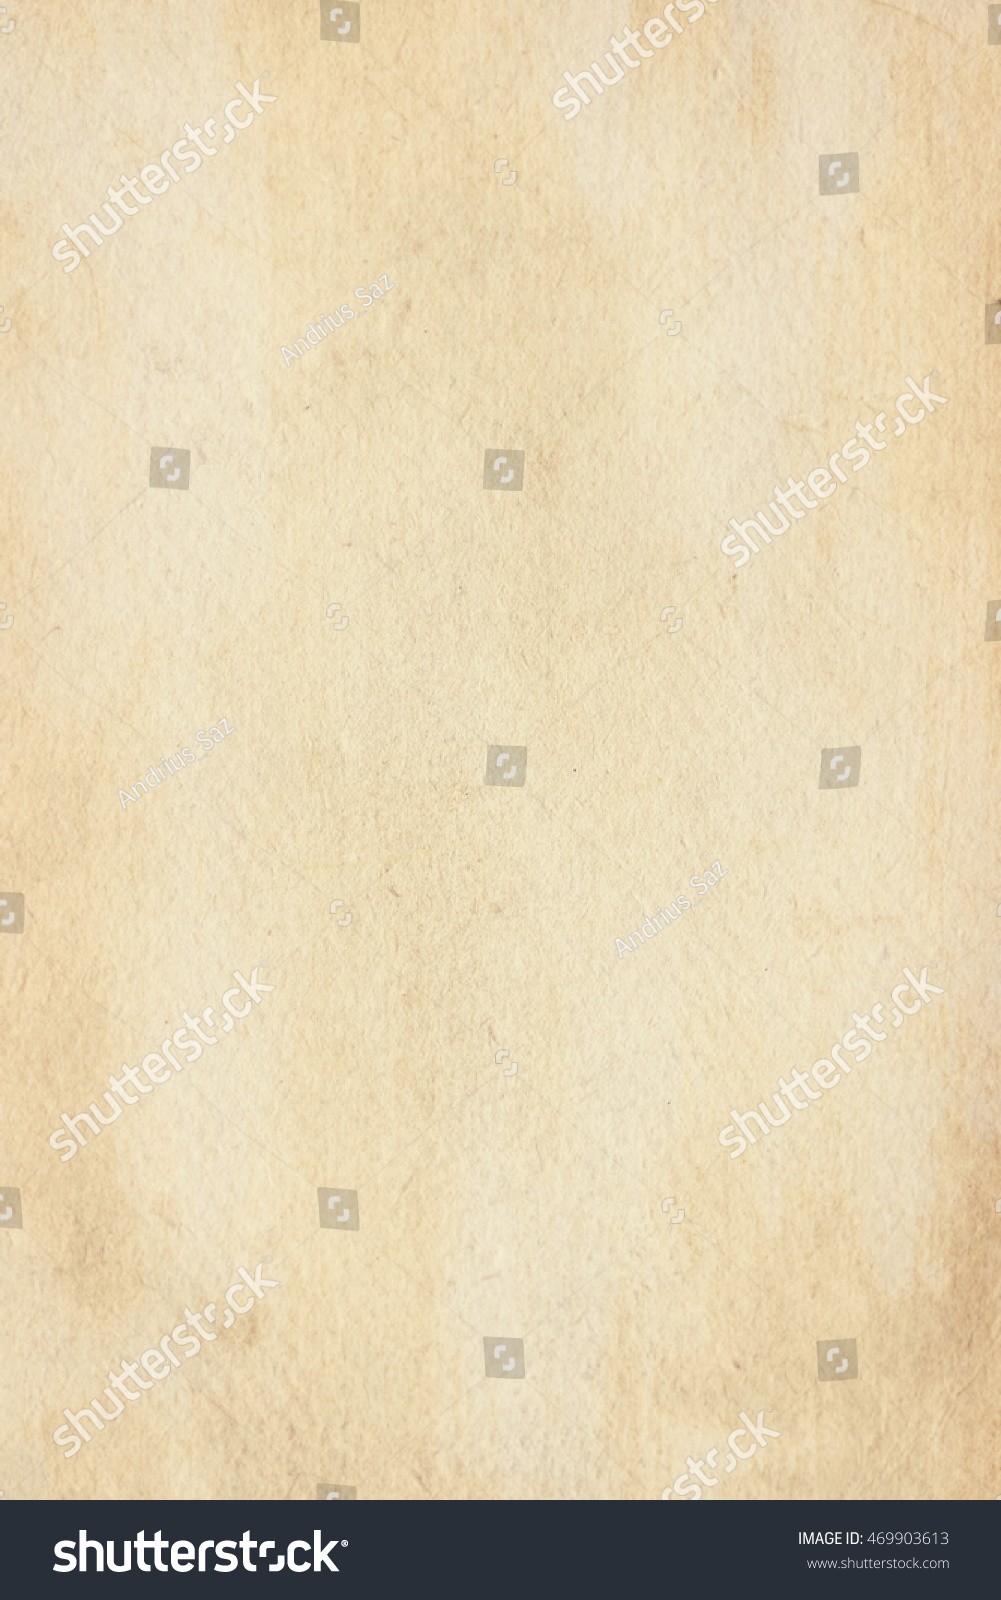 High resolution (hi res) old vintage paper texture. Brown kraft paper background #469903613